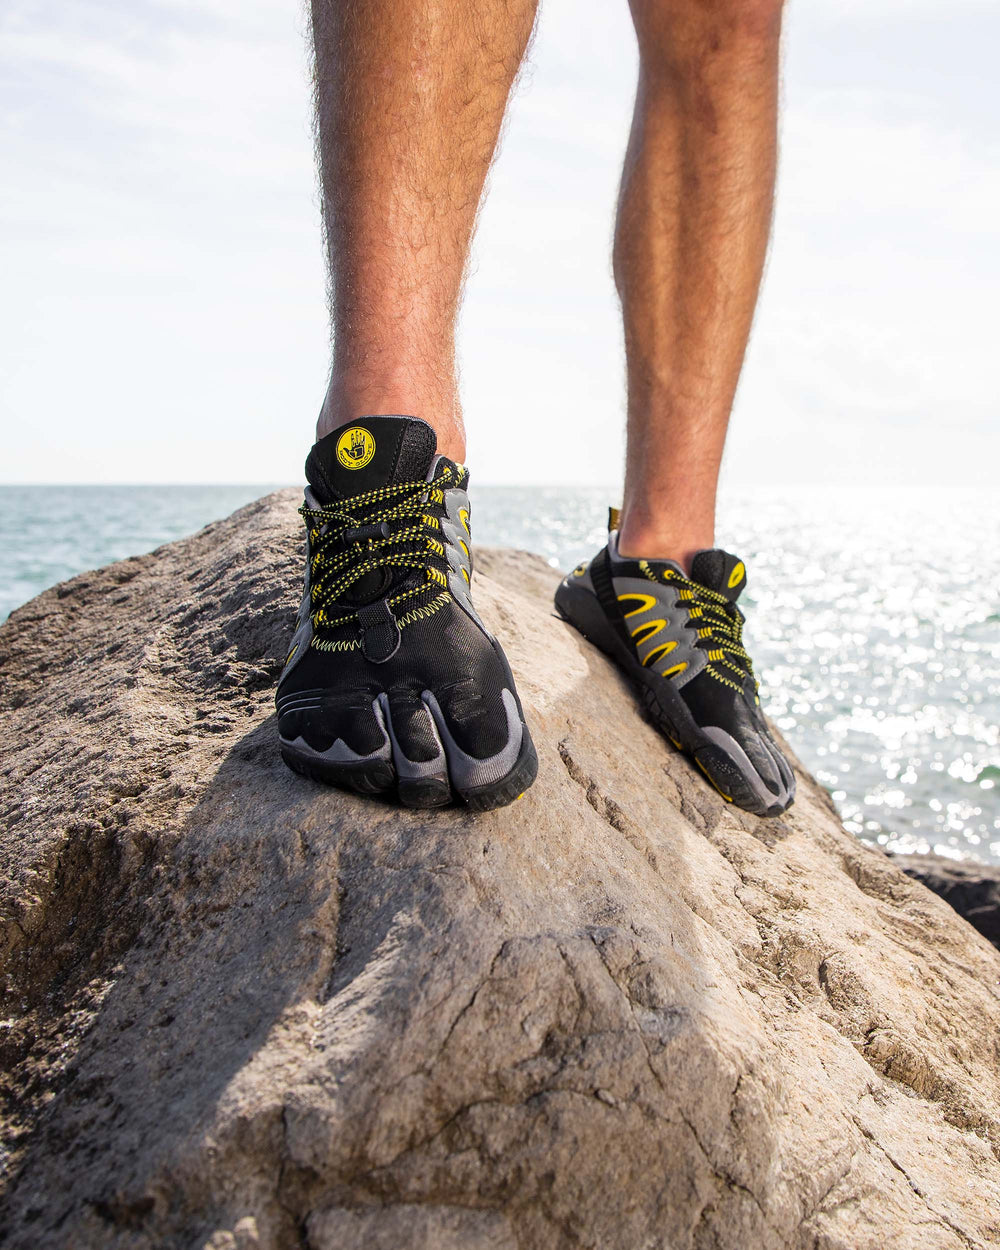 Men's 3T Barefoot Warrior Water Shoes - Black/Yellow